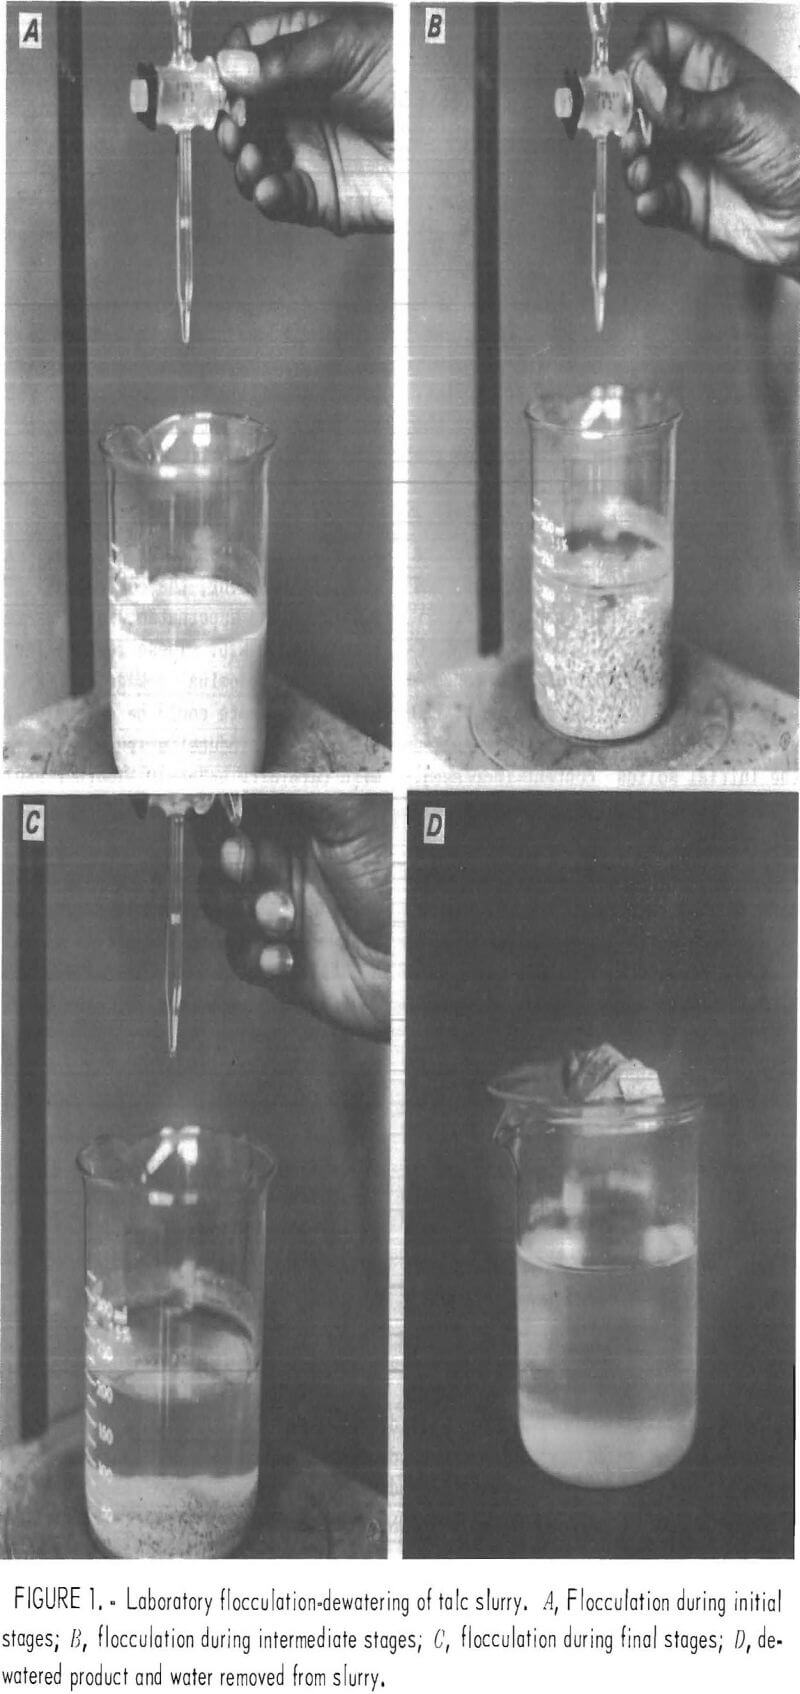 dewatering of talc slurry laboratory flocculation